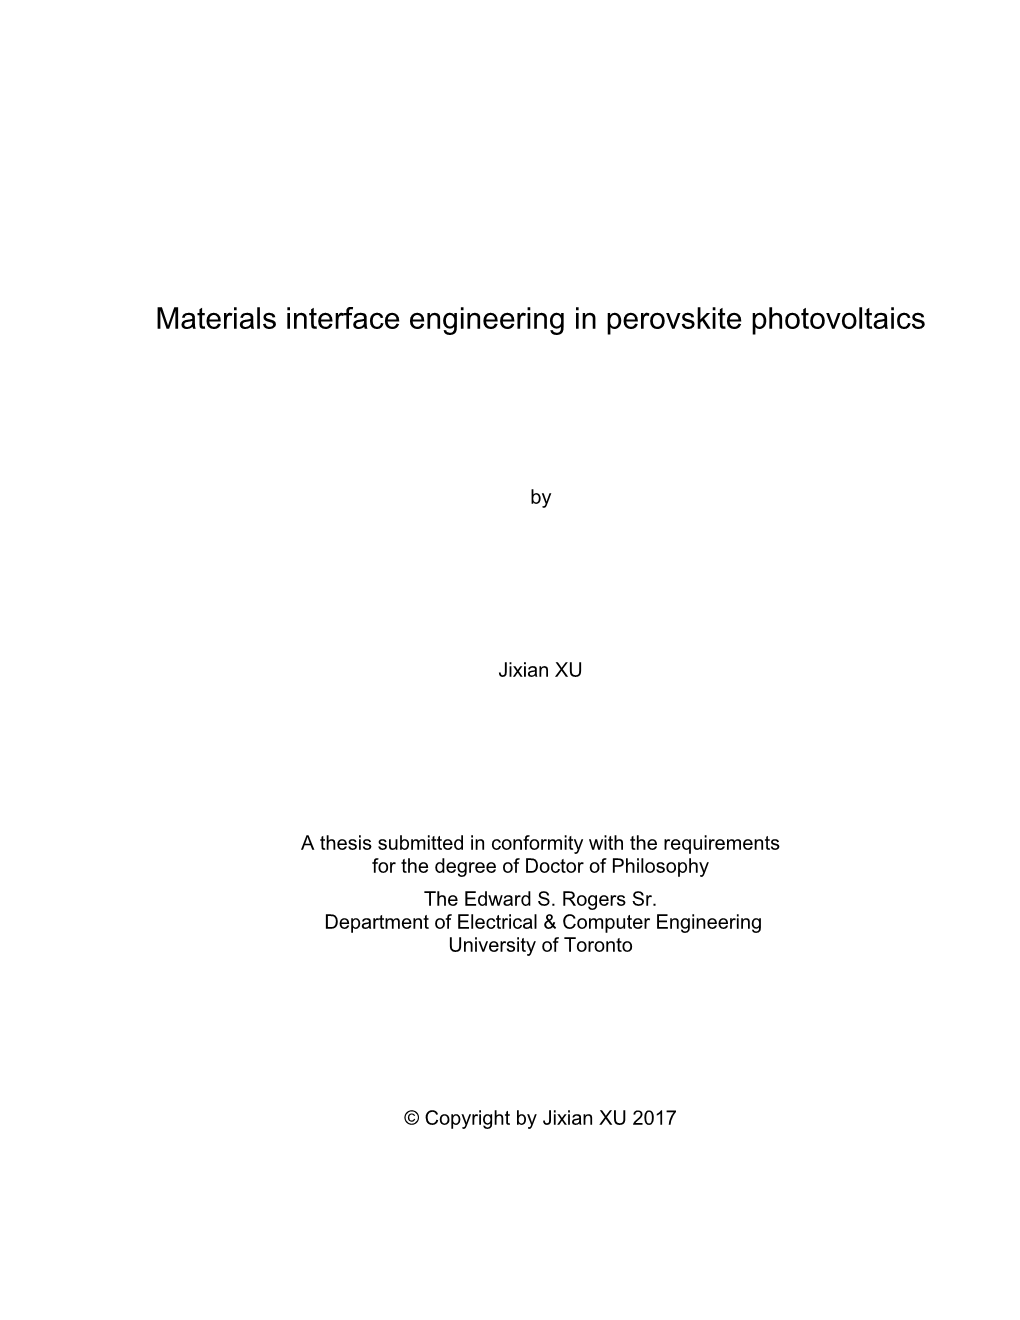 Materials Interface Engineering in Perovskite Photovoltaics